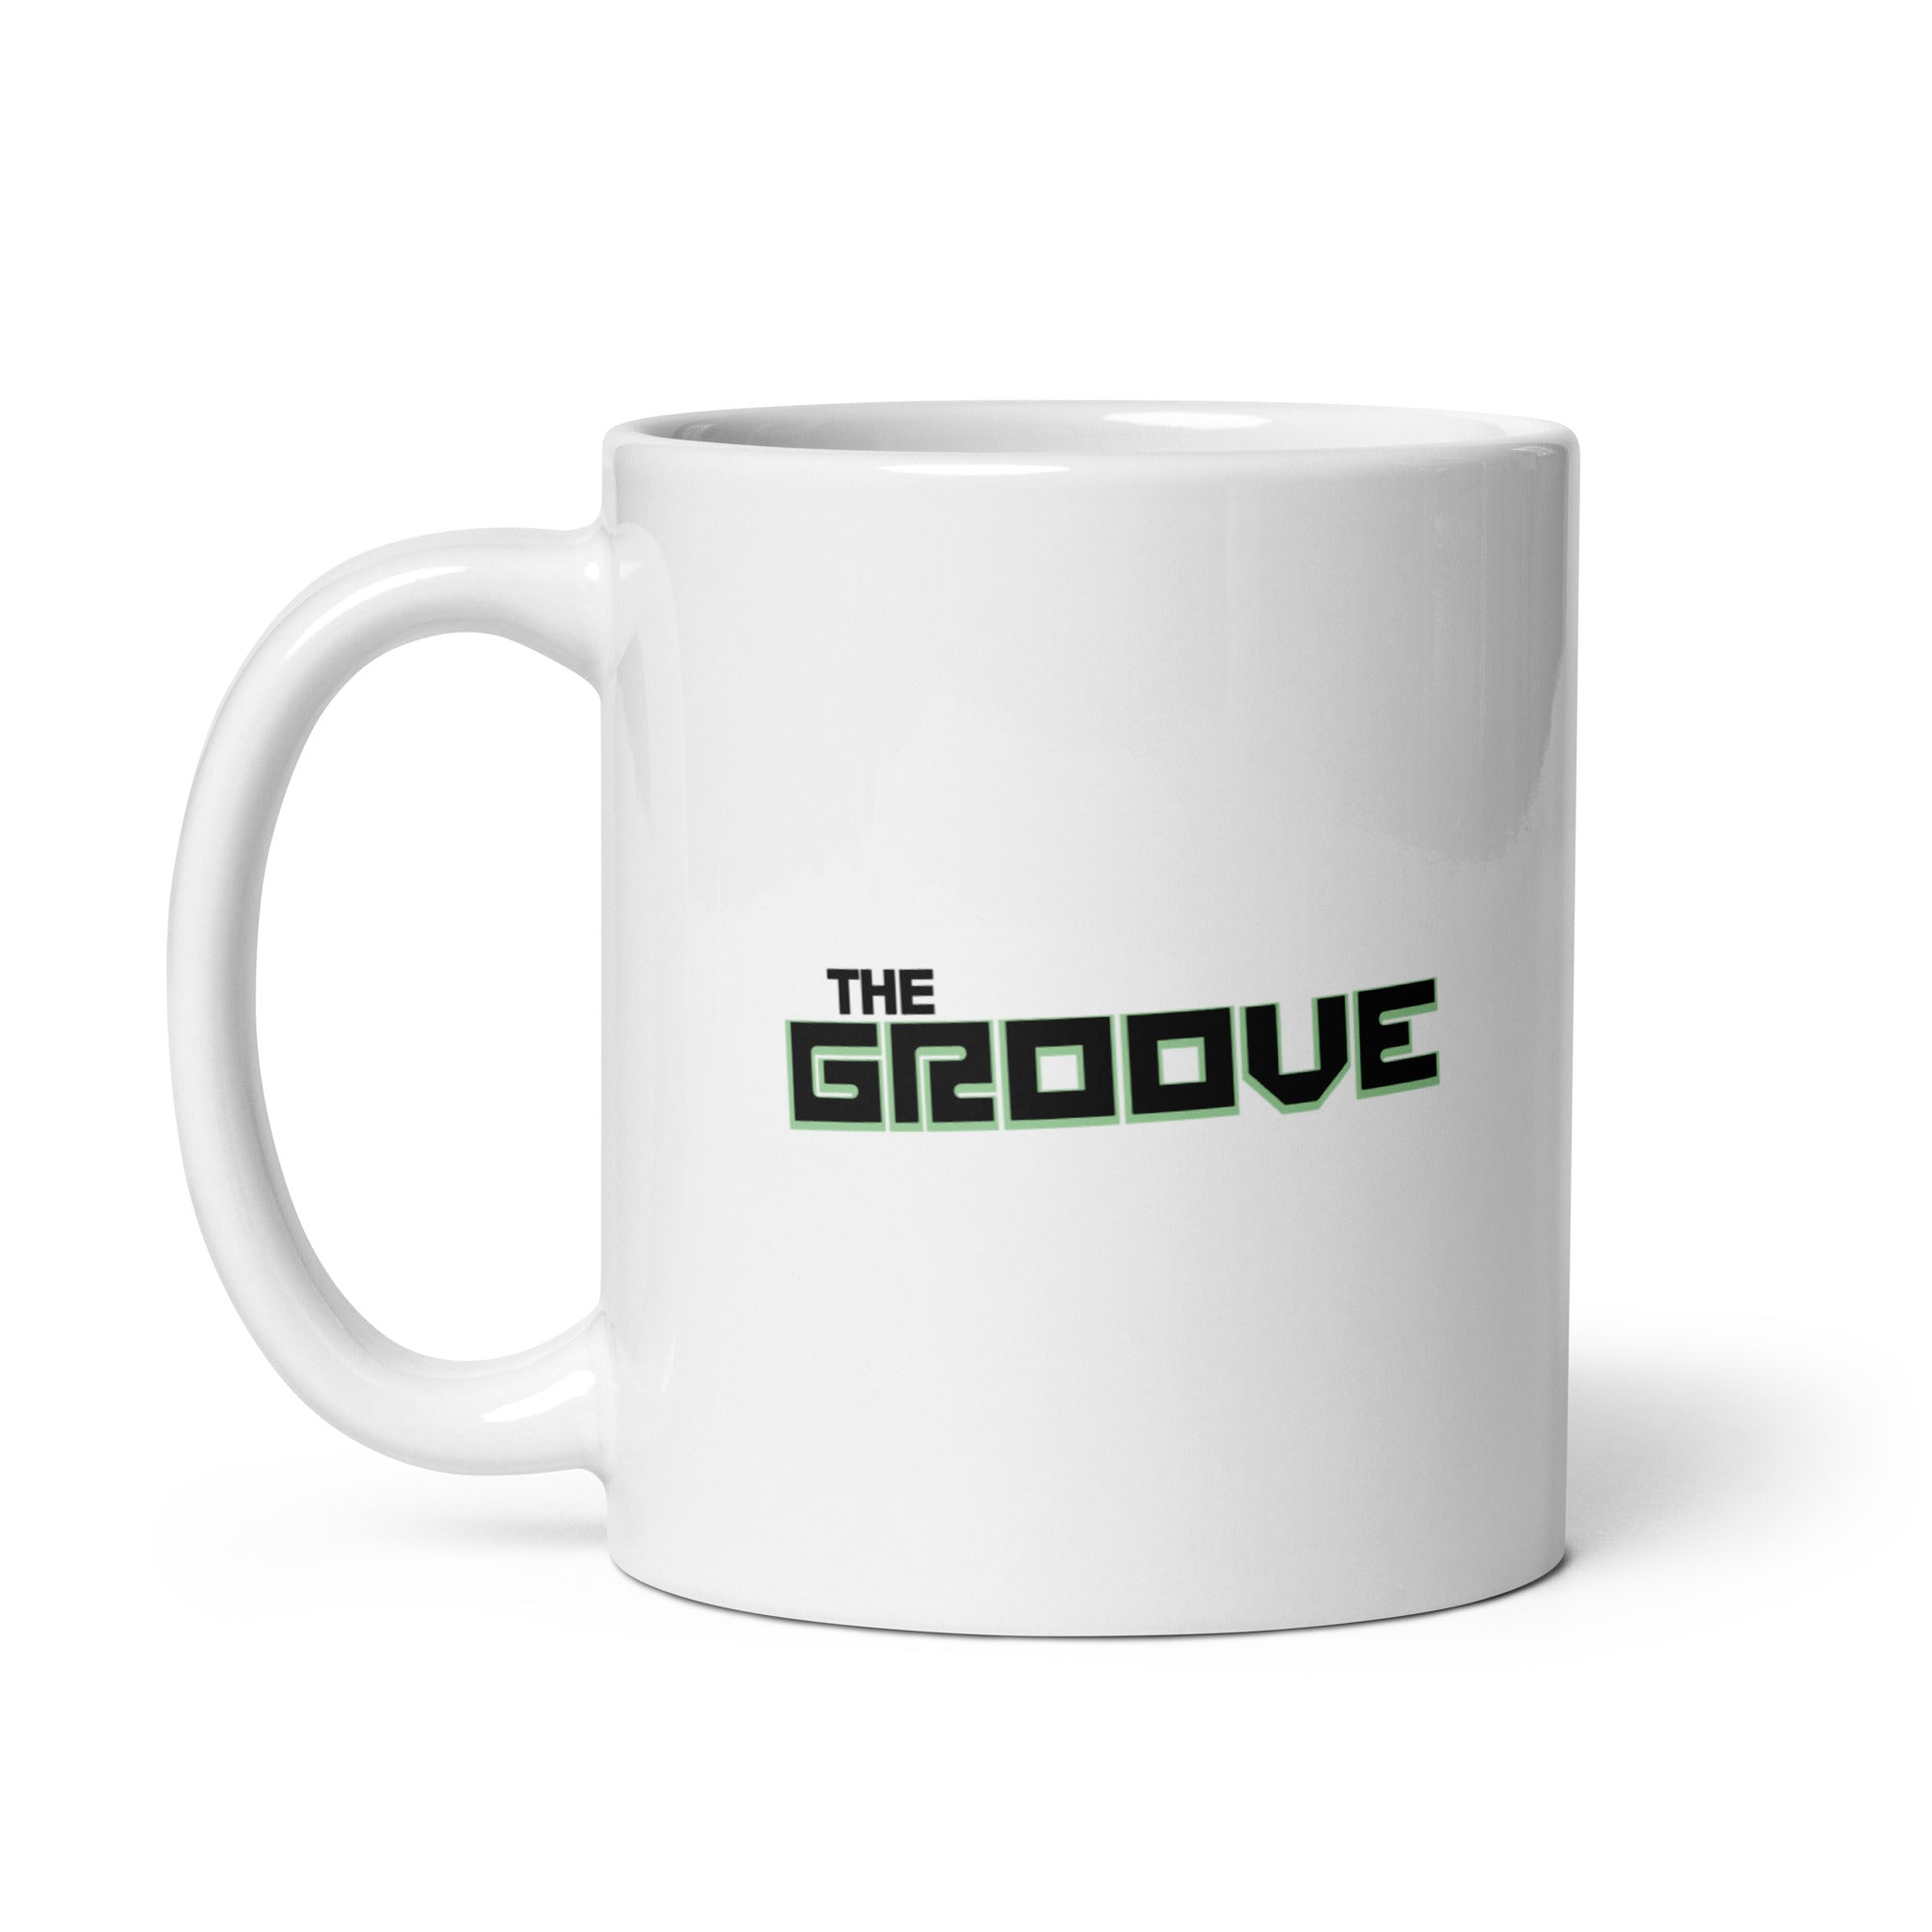 The Groove: Mug